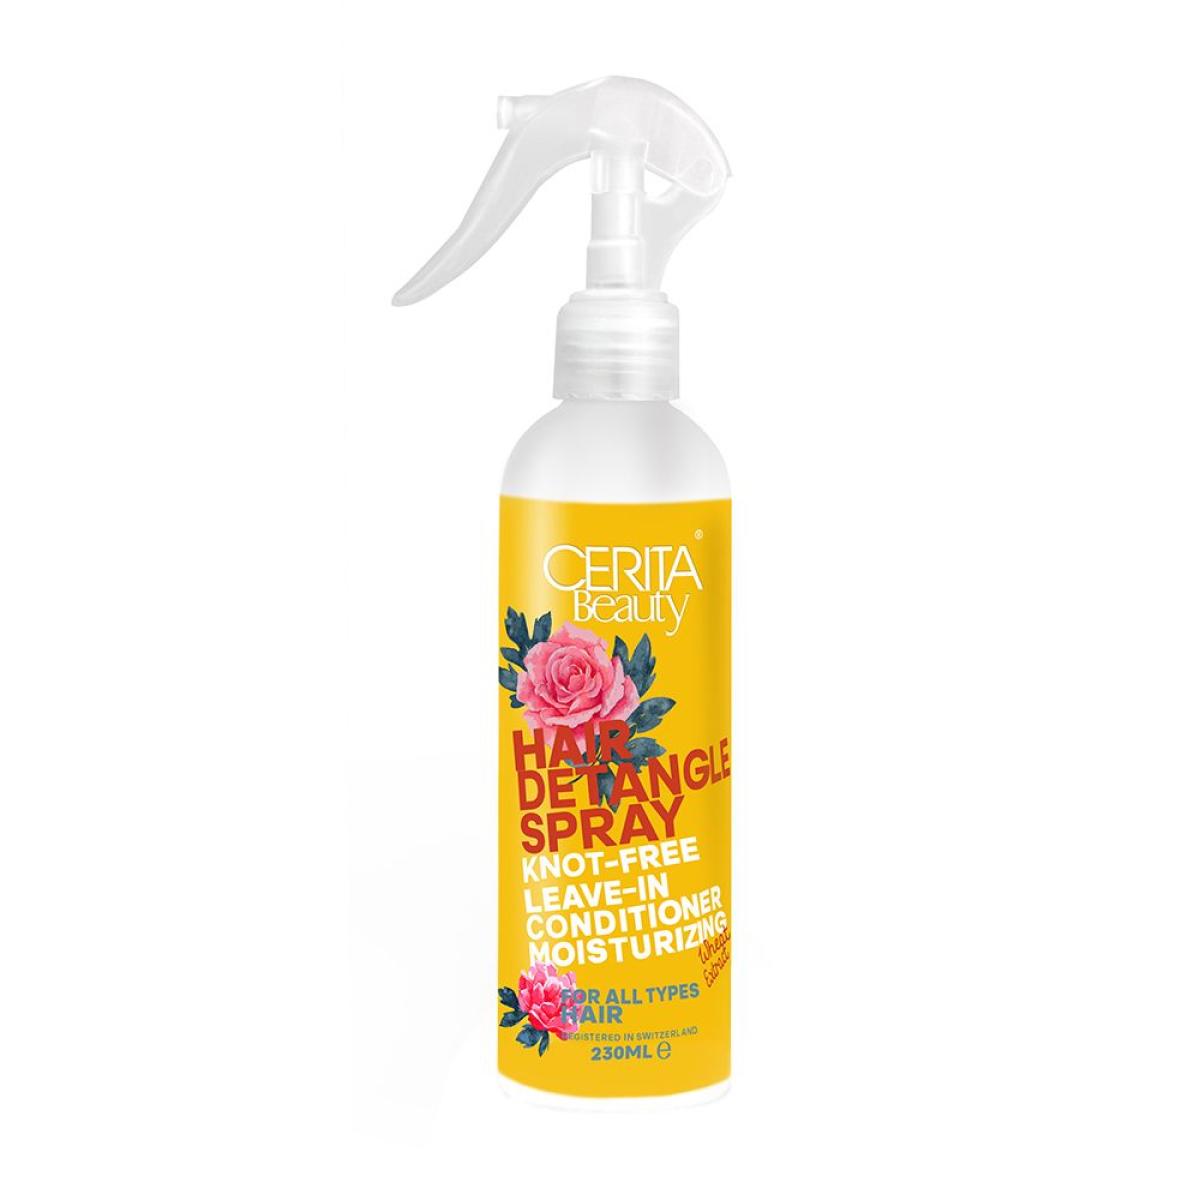 اسپری نرم کننده موی (باز کننده گره مو) - Cerita Beauty Hair Detangler Spray for All Types of Hair 230 ml